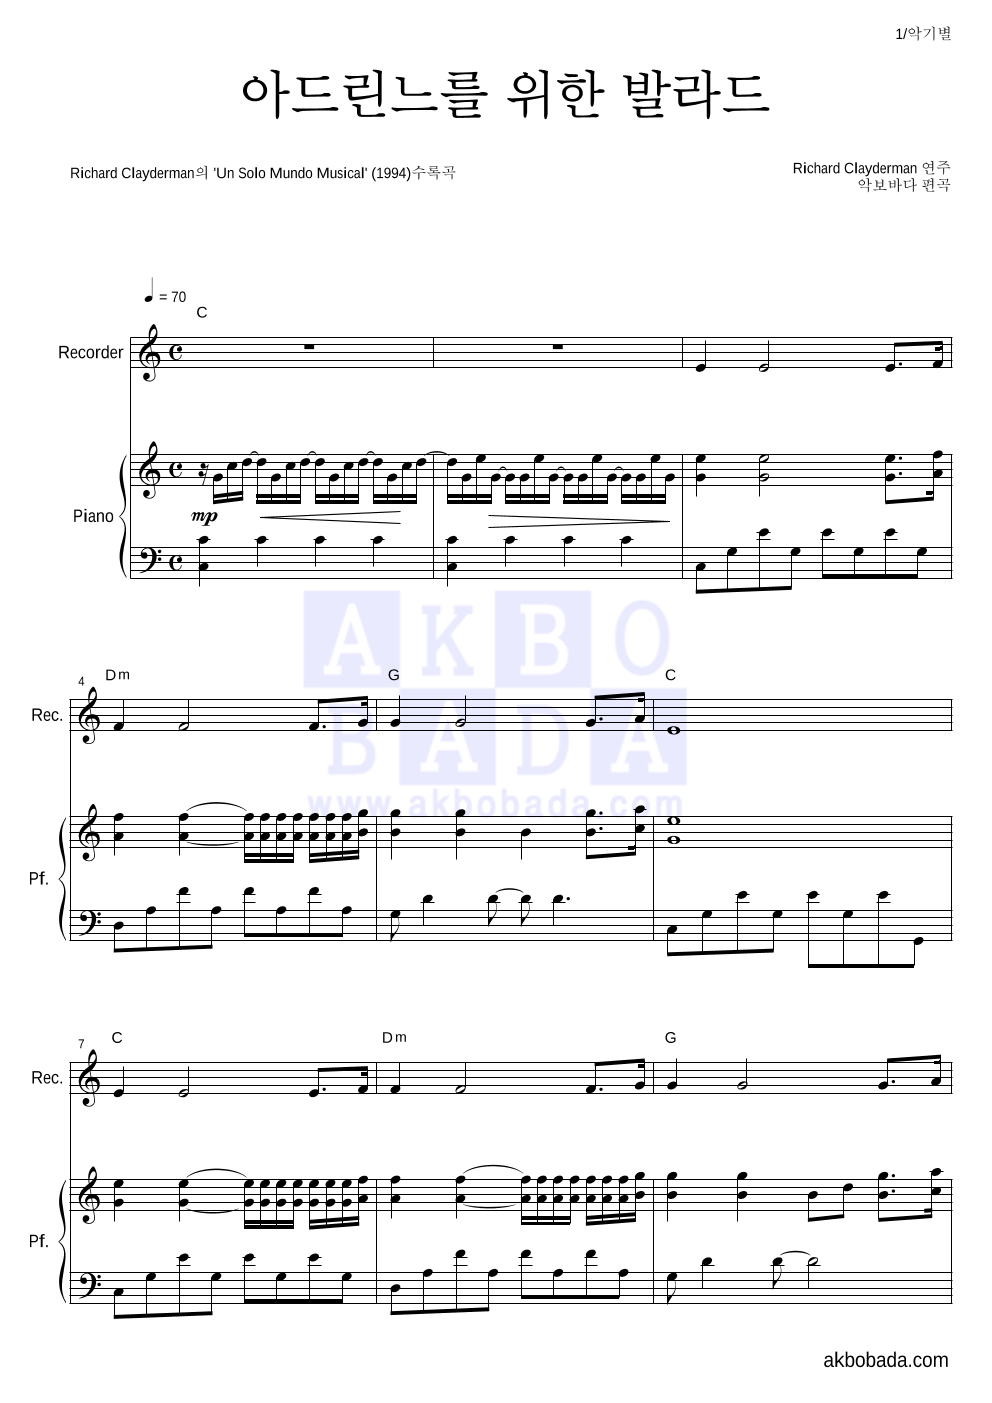 Richard Clayderman  - 아드린느를 위한 발라드 리코더&피아노 악보 